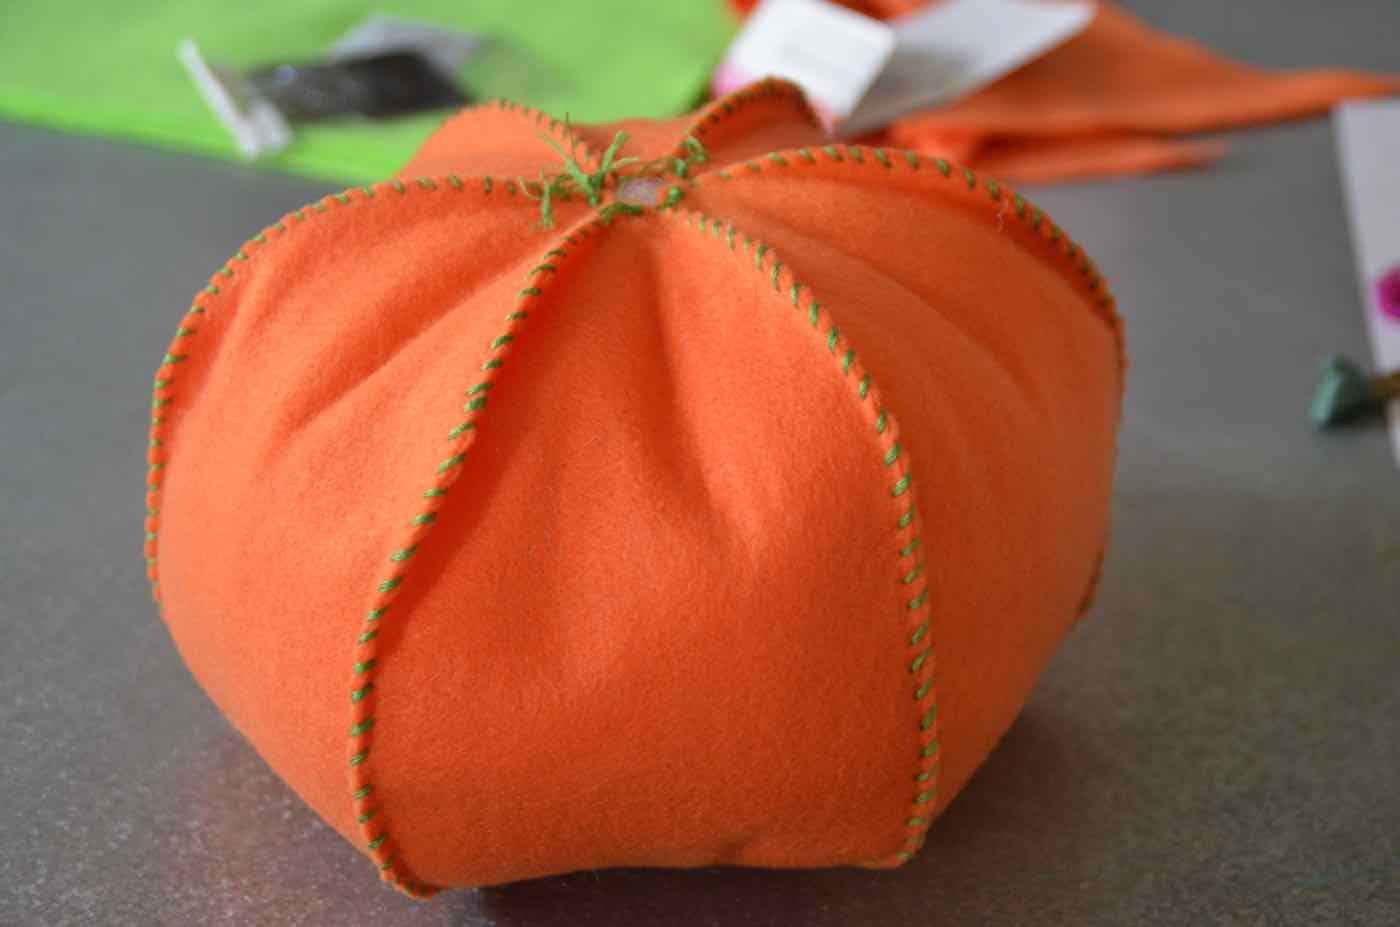 Stuffed pumpkins made from scrap fabric all ready for Halloween decor.